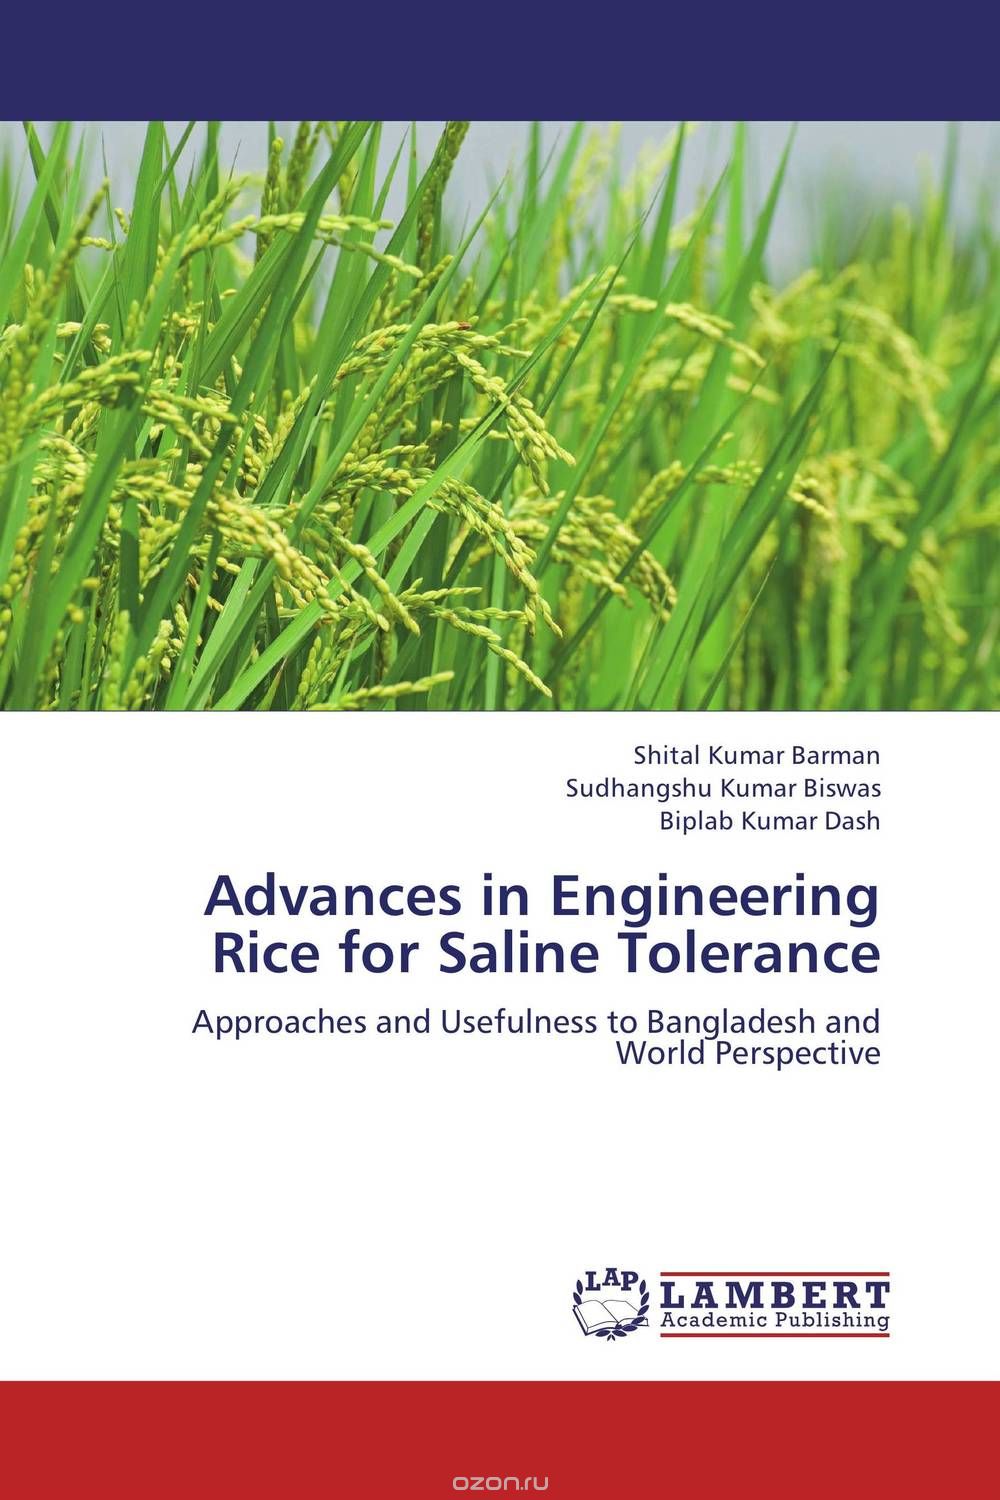 Скачать книгу "Advances in Engineering Rice for Saline Tolerance"